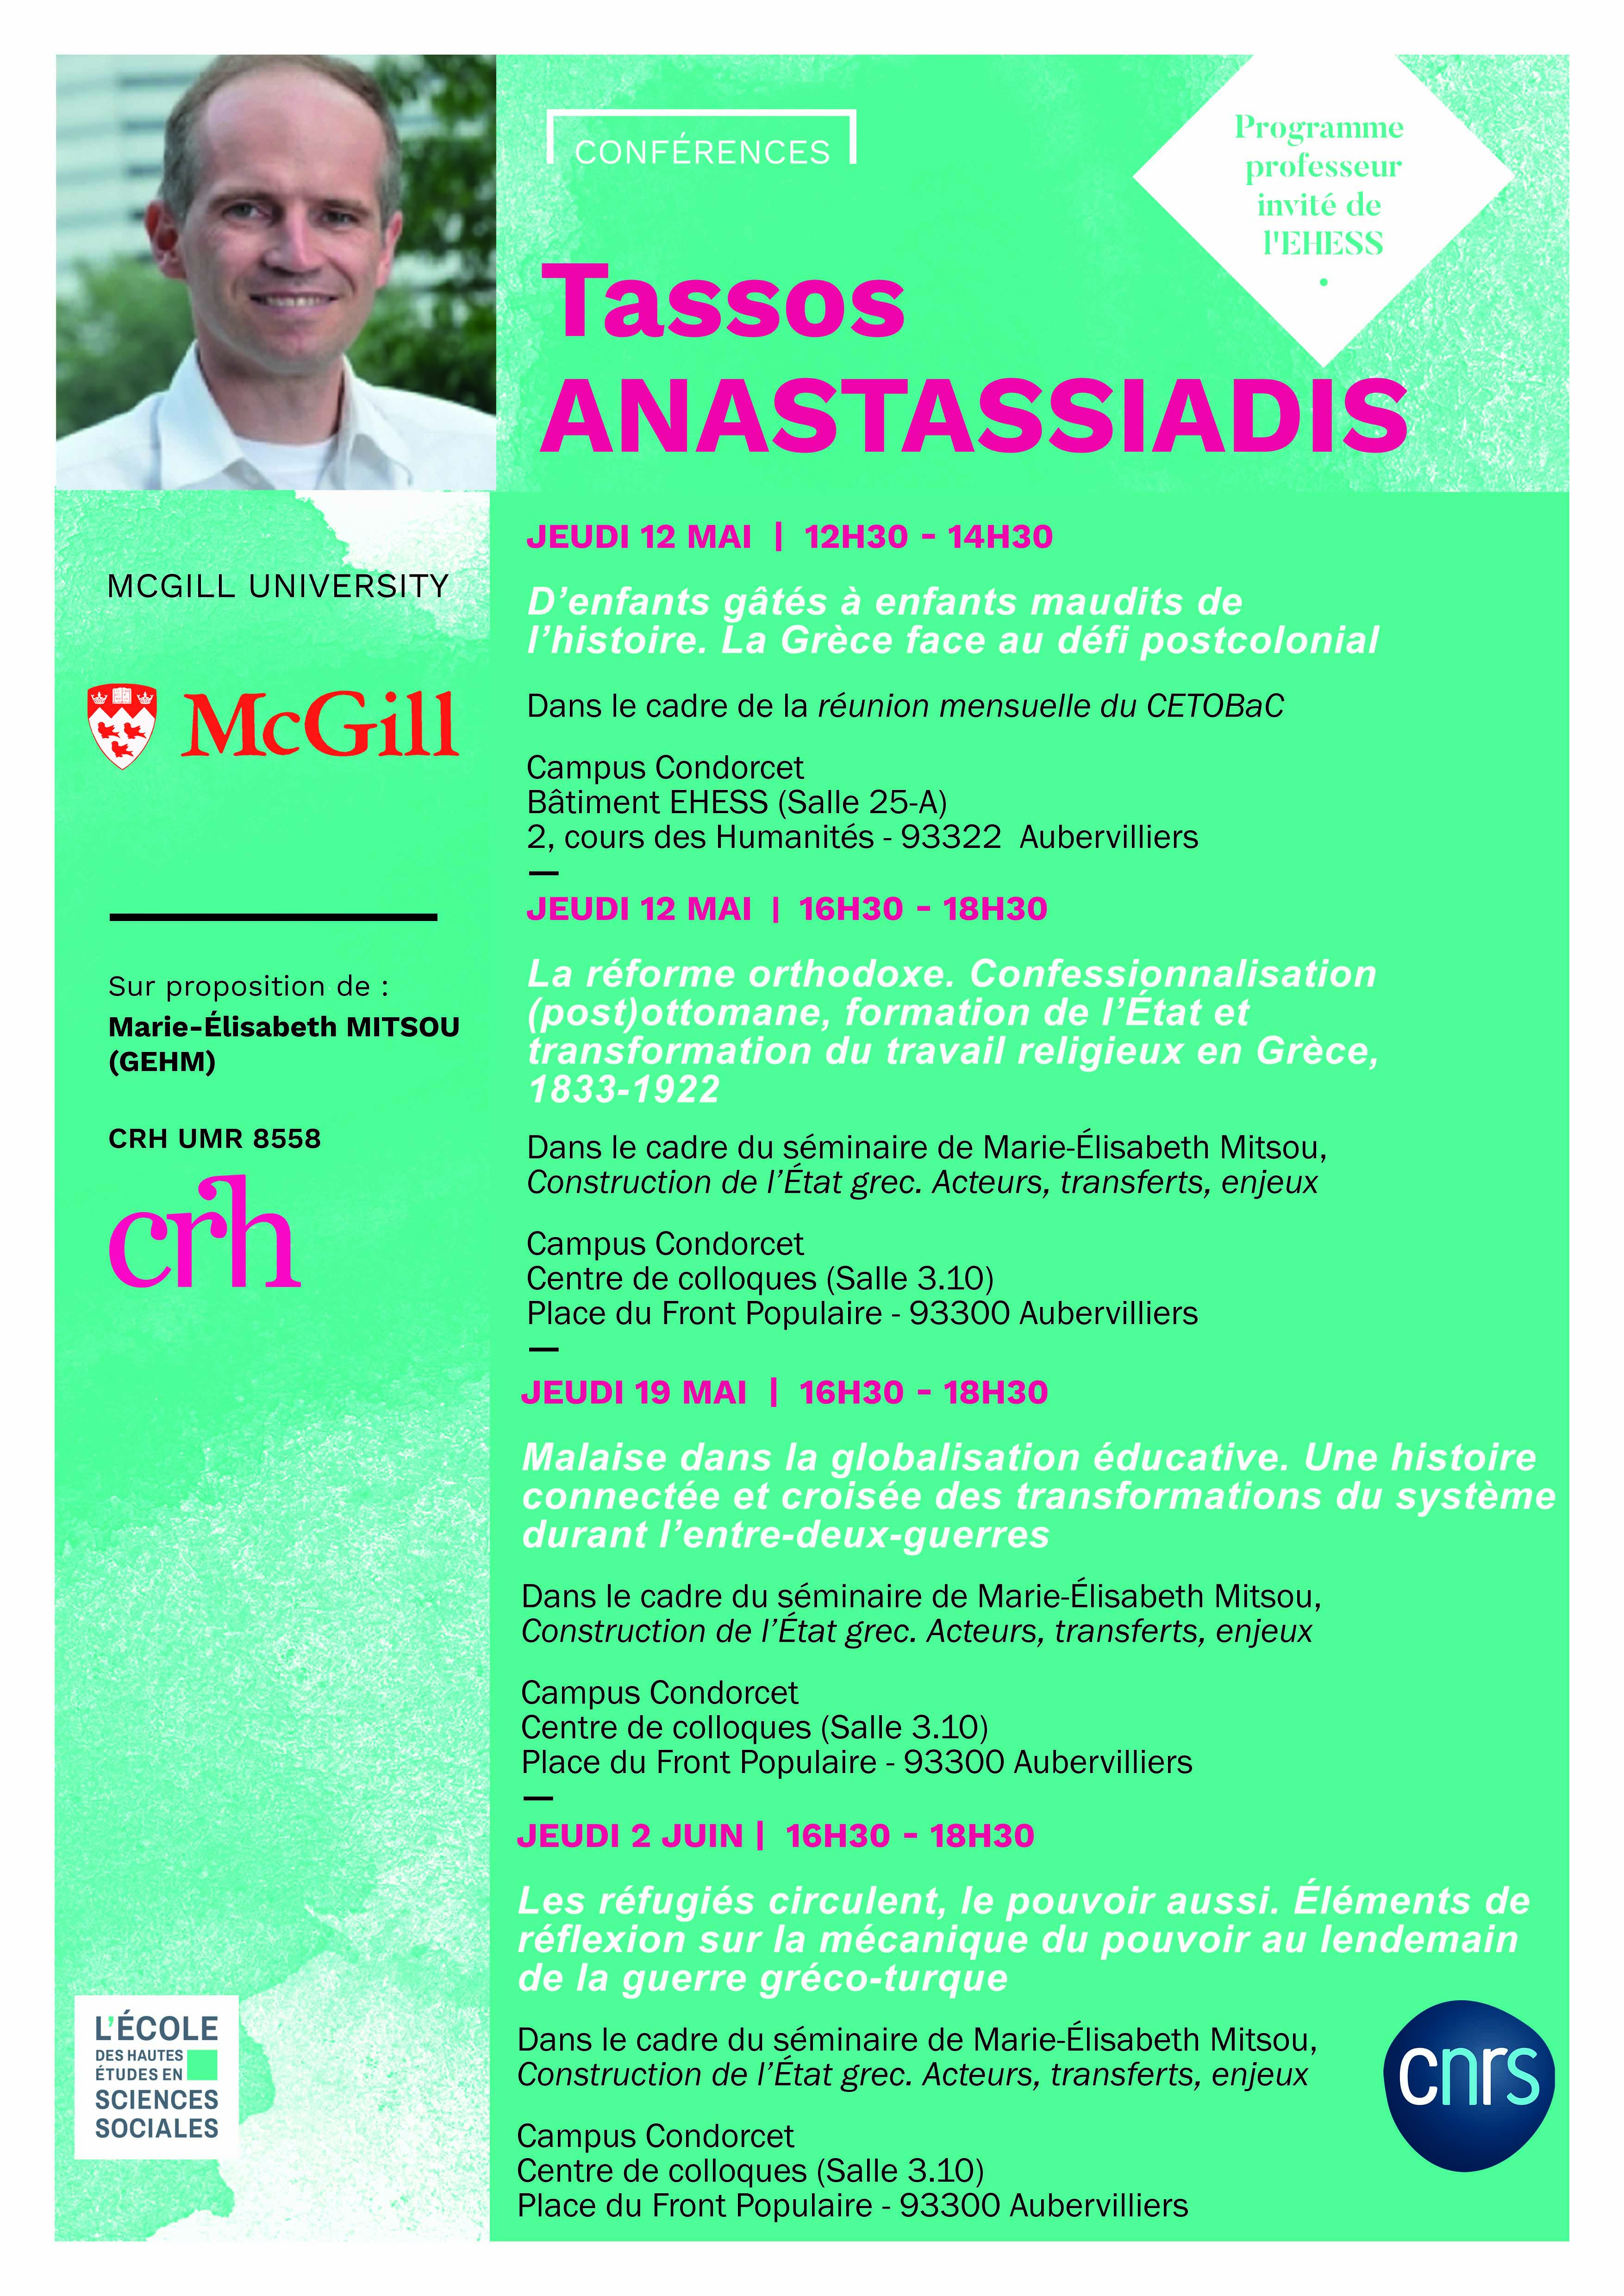 Conférences d'Anastassios Anastassiadis (McGill University)